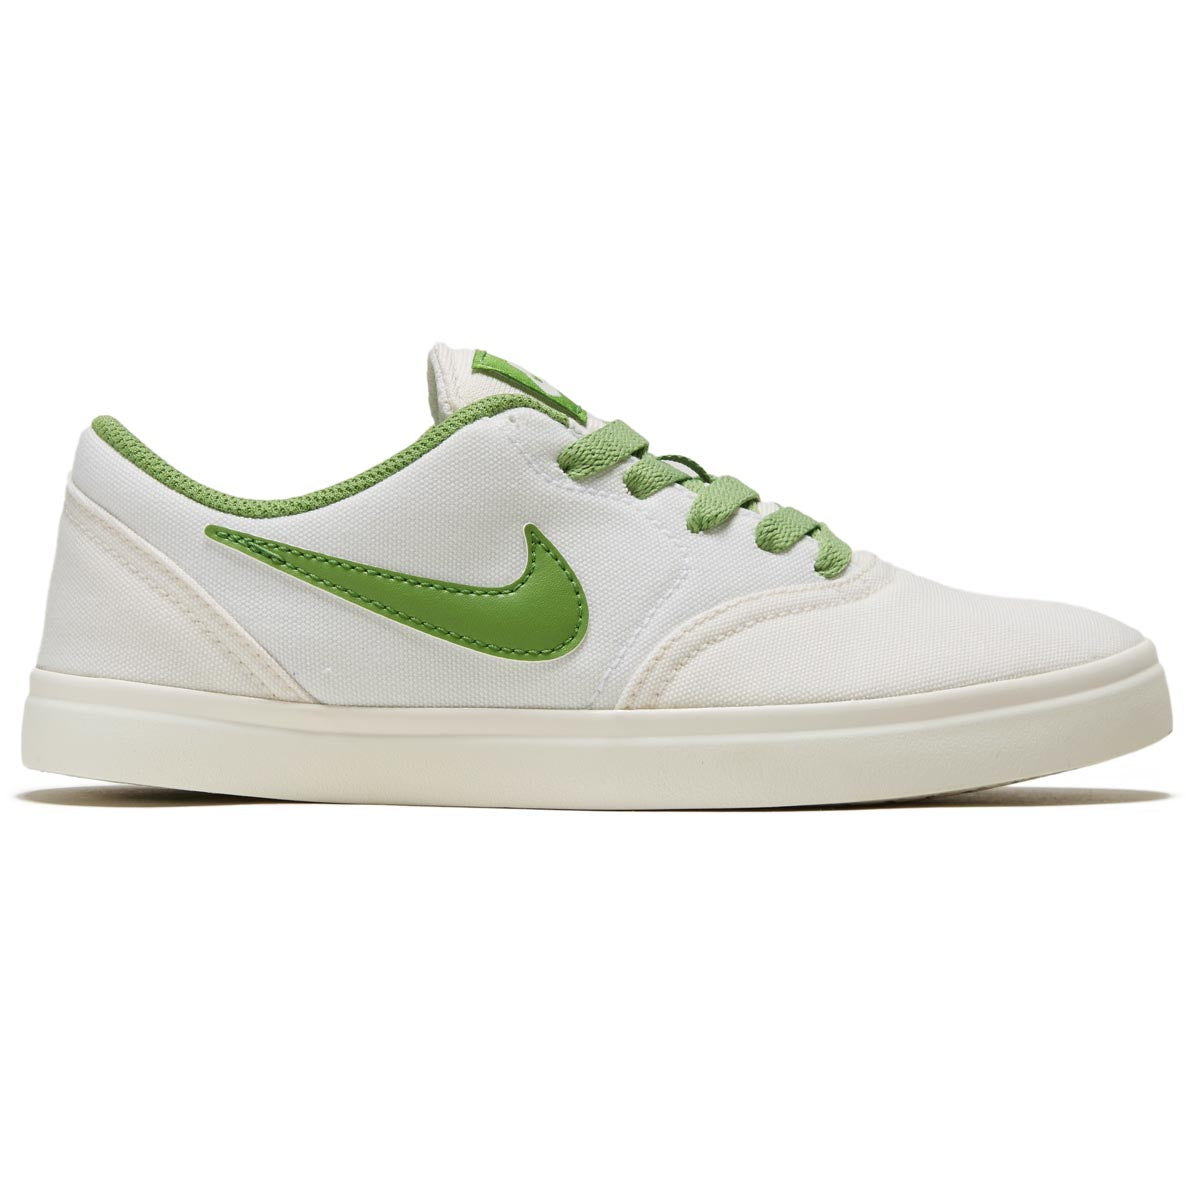 Nike SB Check Canvas Shoes - Phantom/Chlorophyll/Summit White/Sail image 1